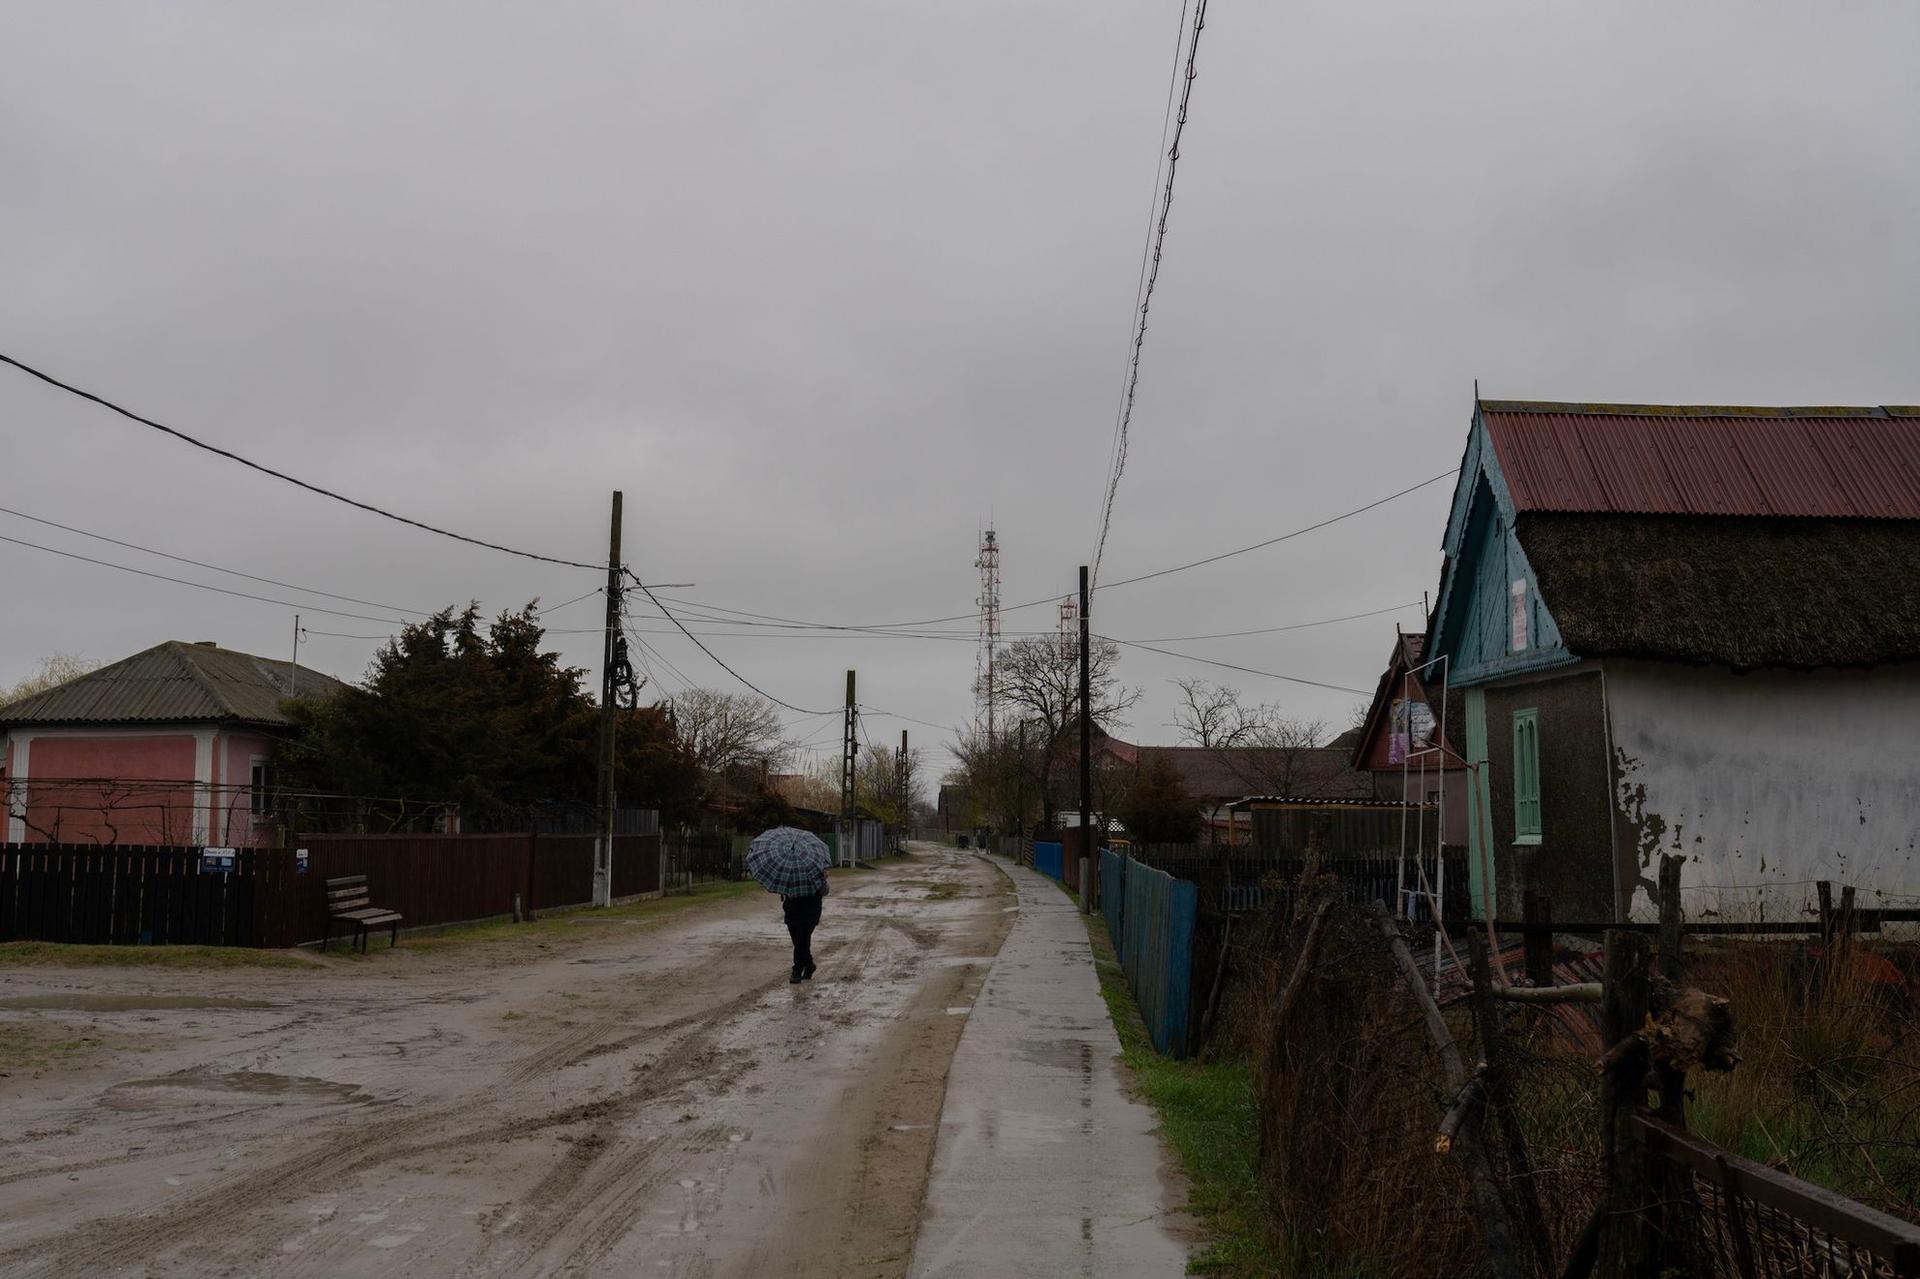 Street I in Sfântu Gheorghe, a commune in Tulcea county with a population of about 600 inhabitants. Photo: Andreea Câmpeanu